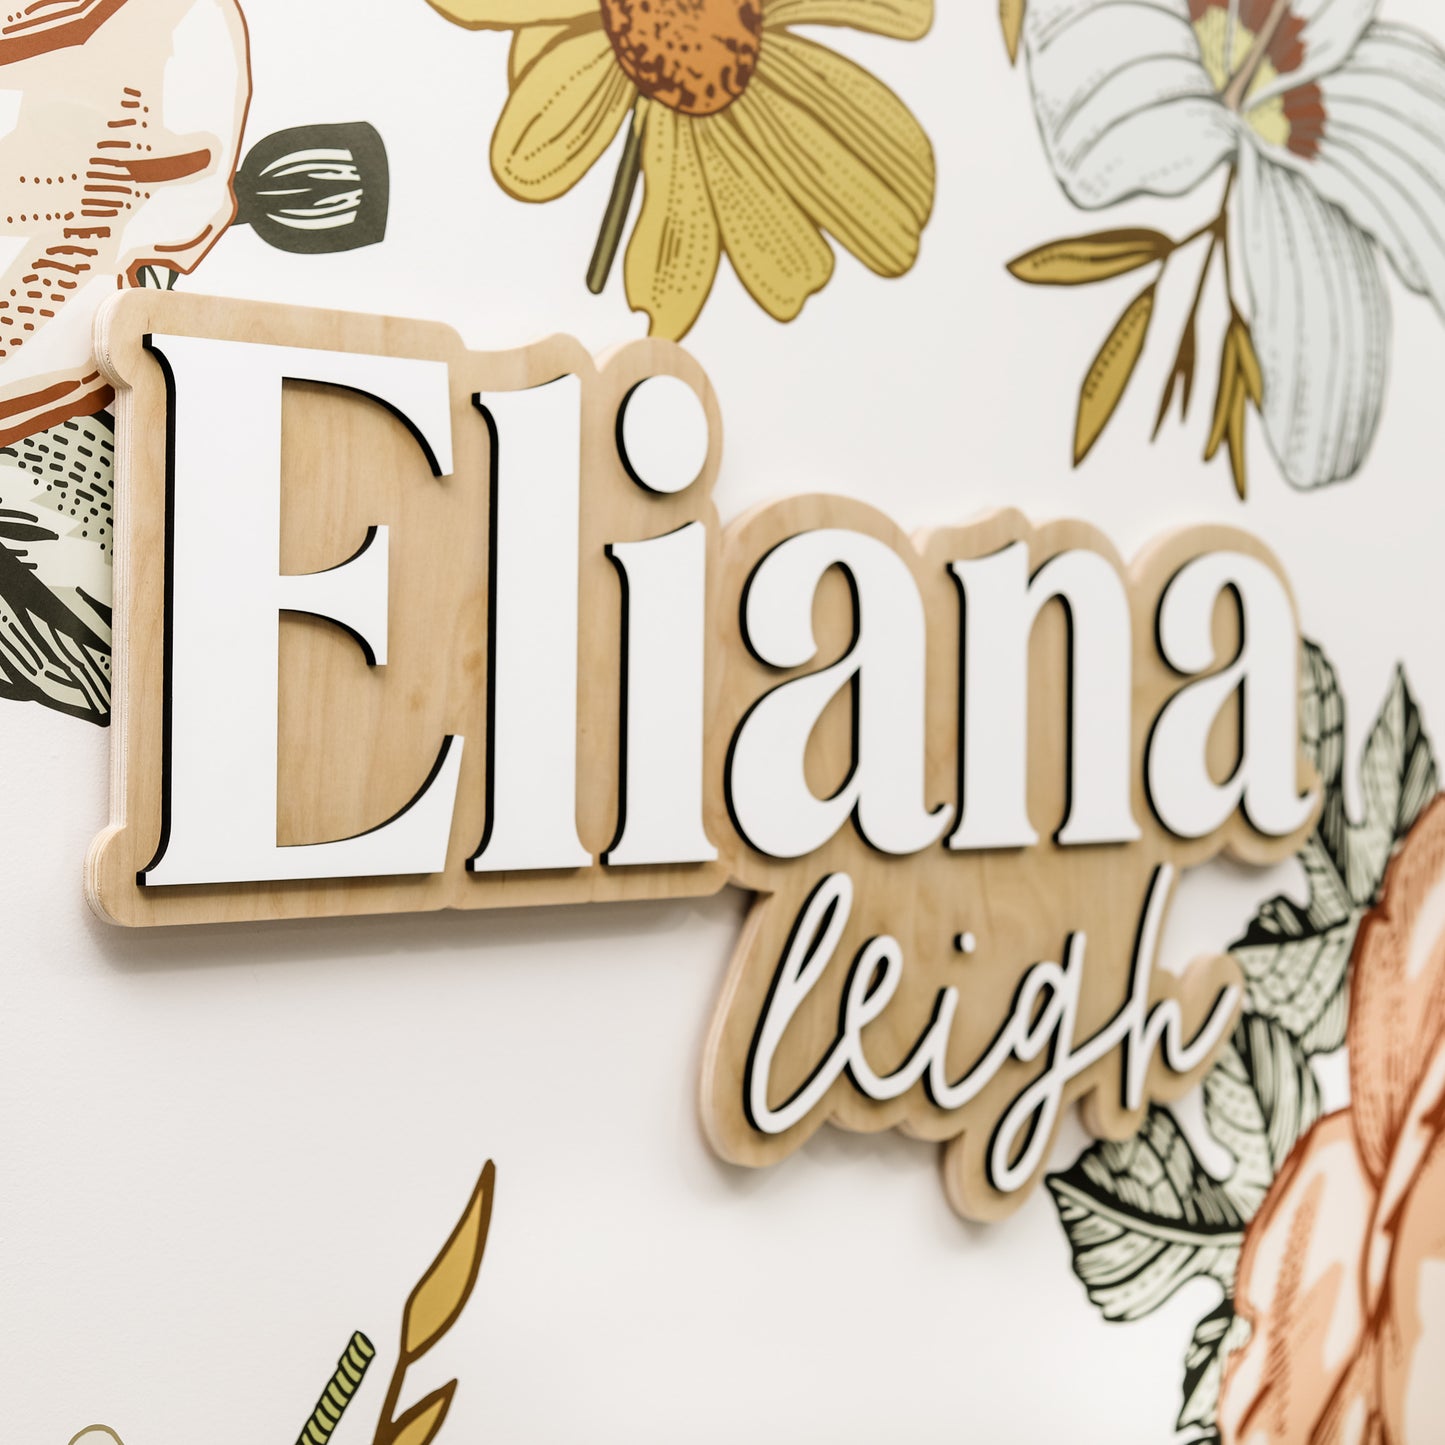 Eliana Leigh Outline Design